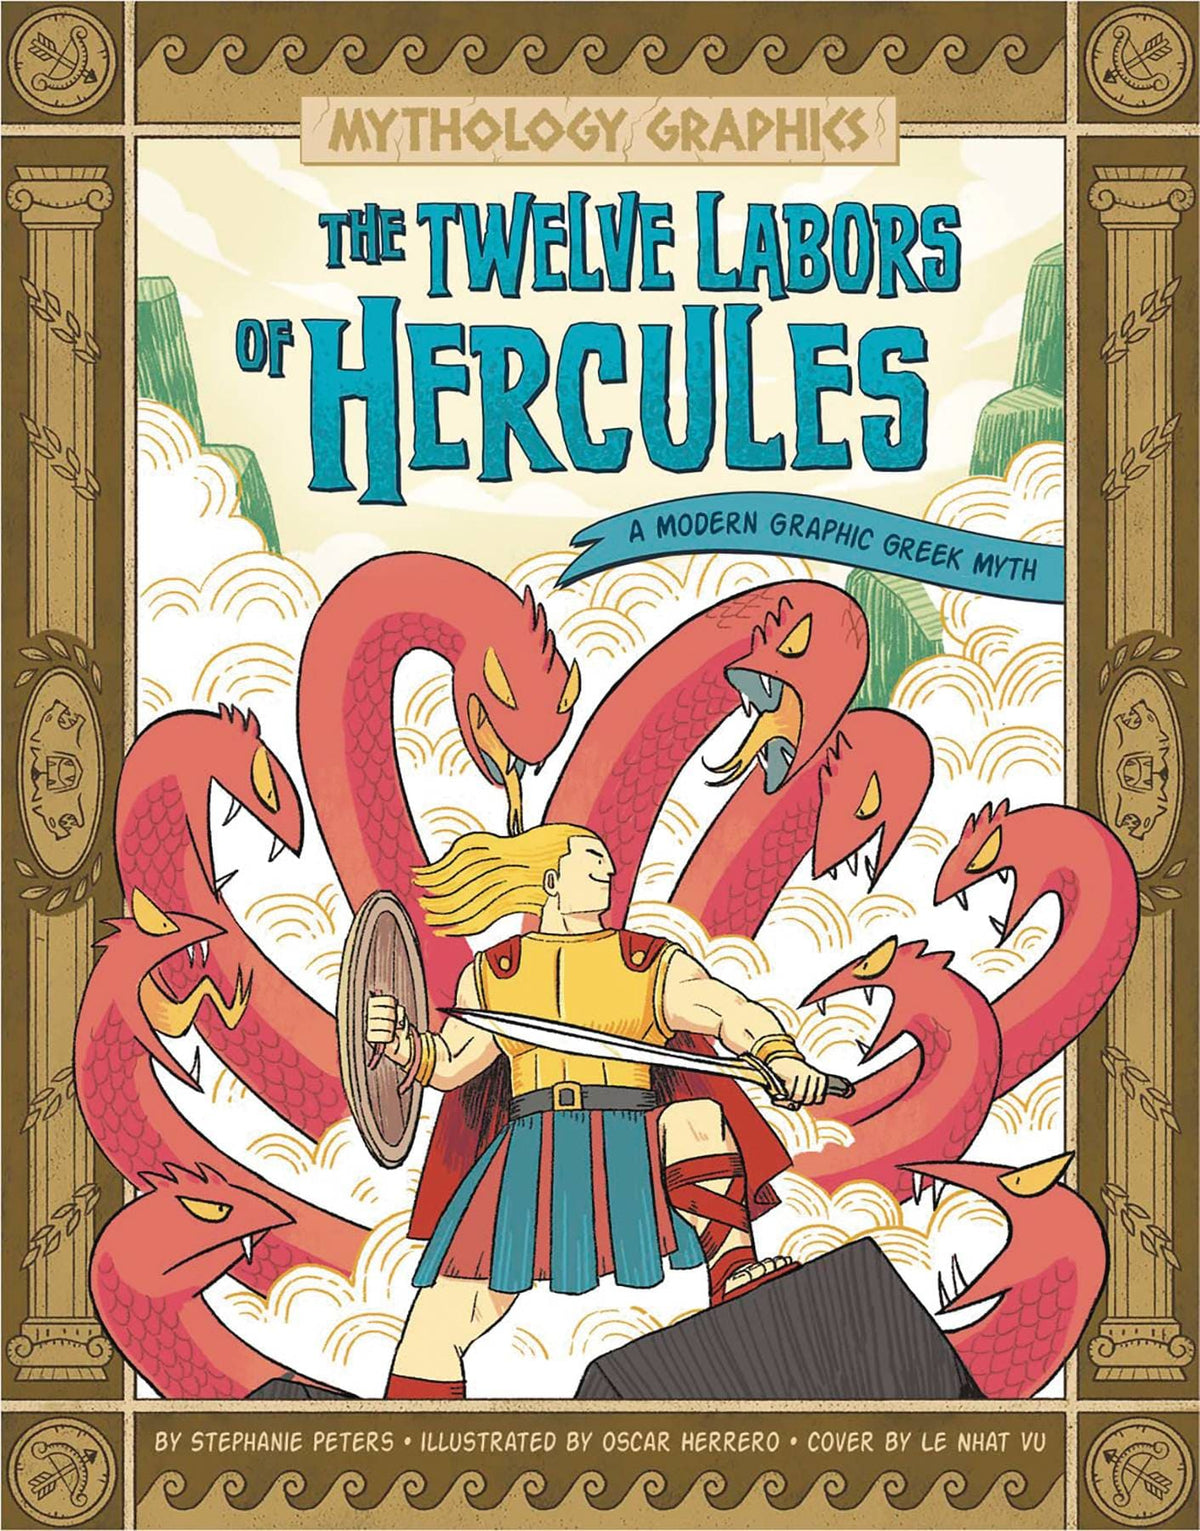 Mythology Graphics 12 Labors Of Hercules